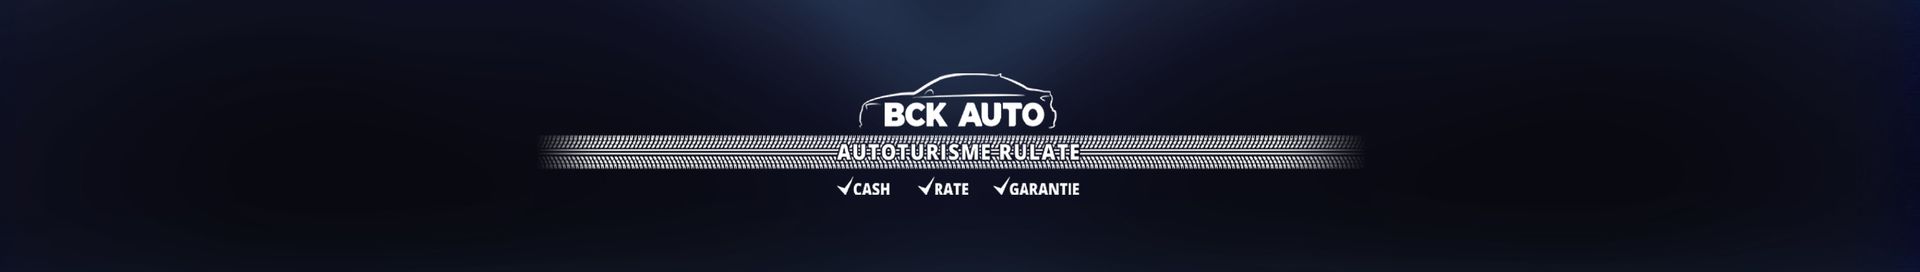 BCK AUTO top banner